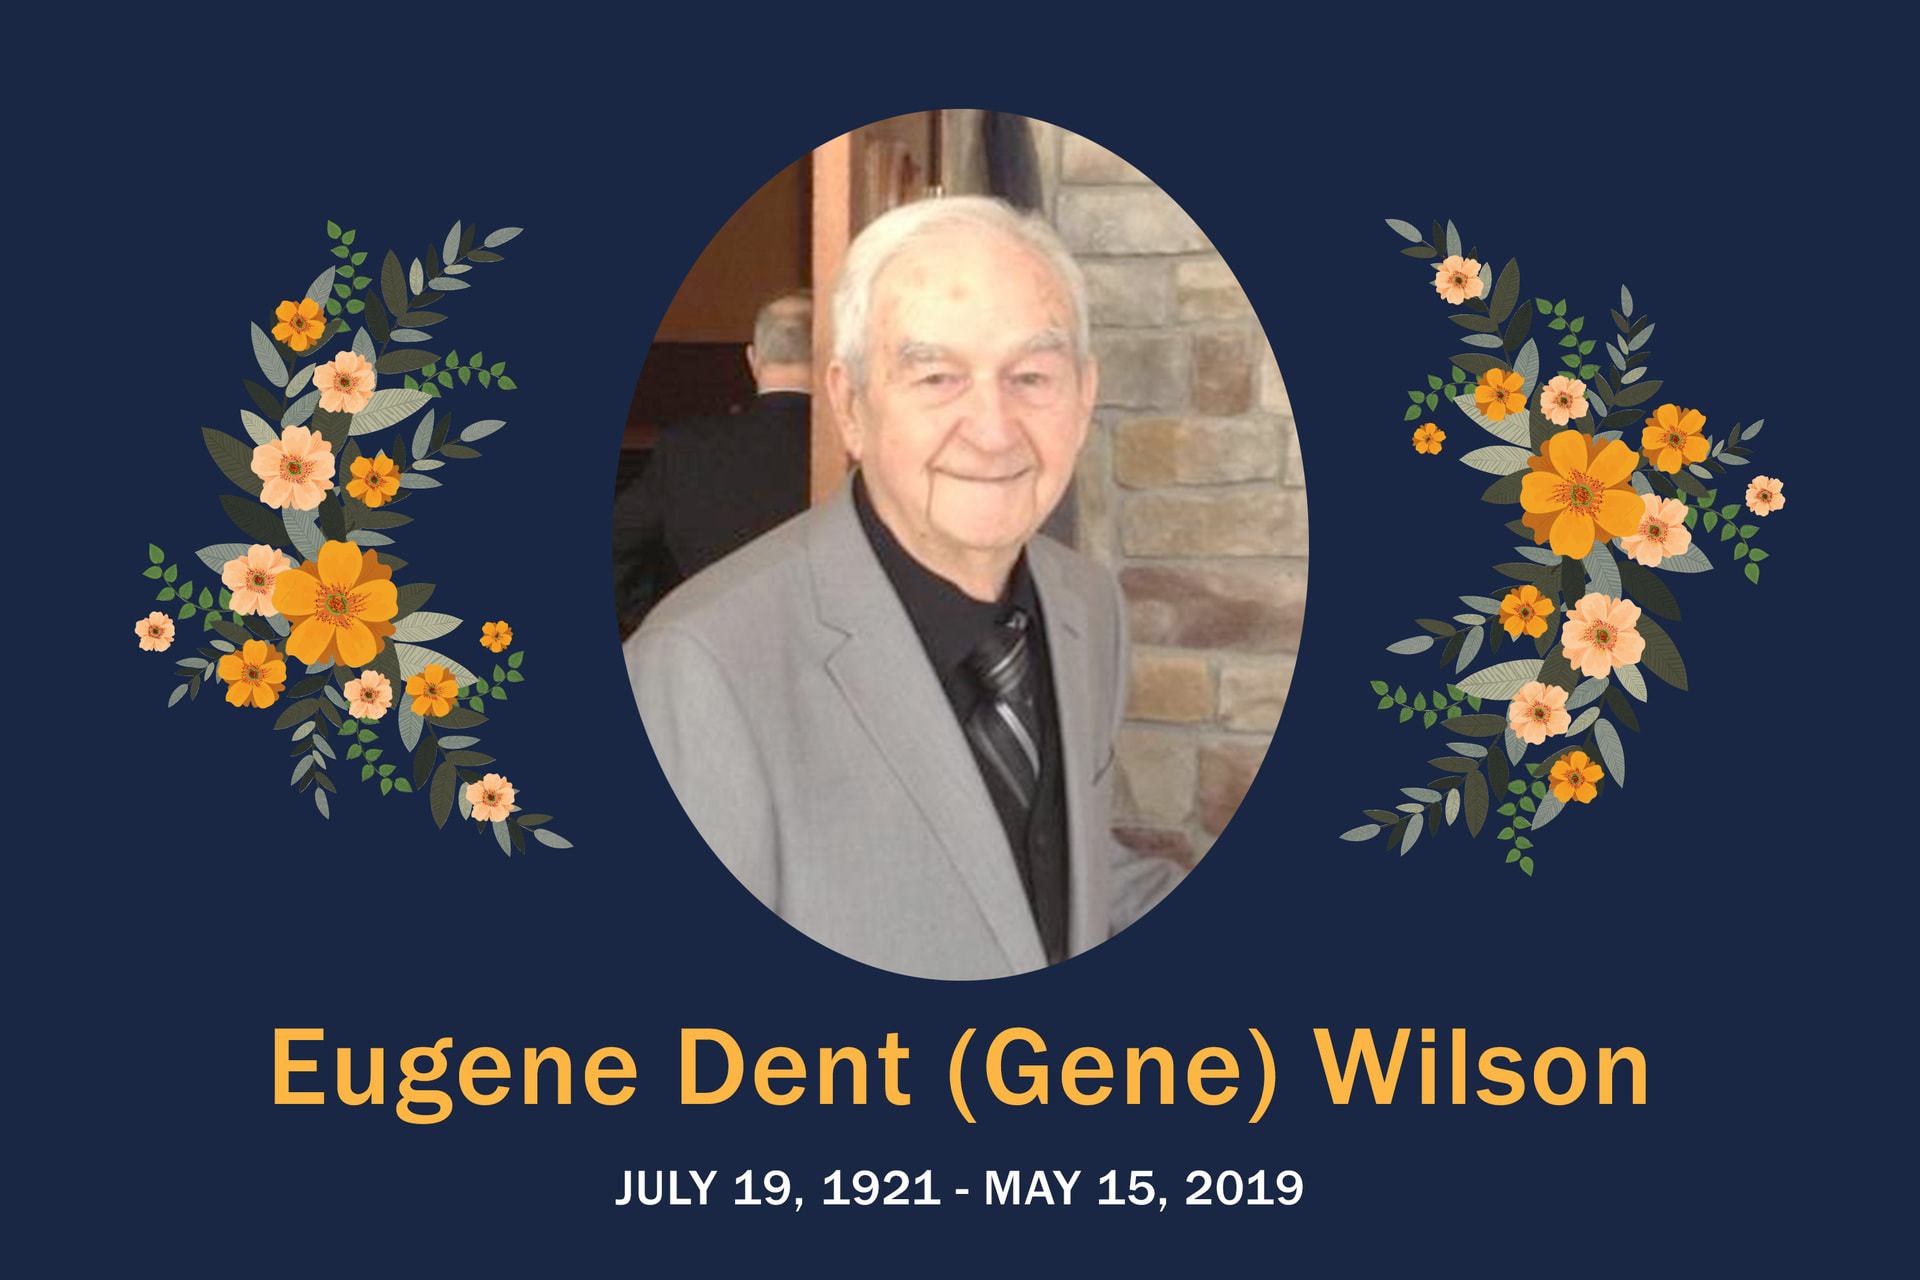 Obituary Gene Wilson